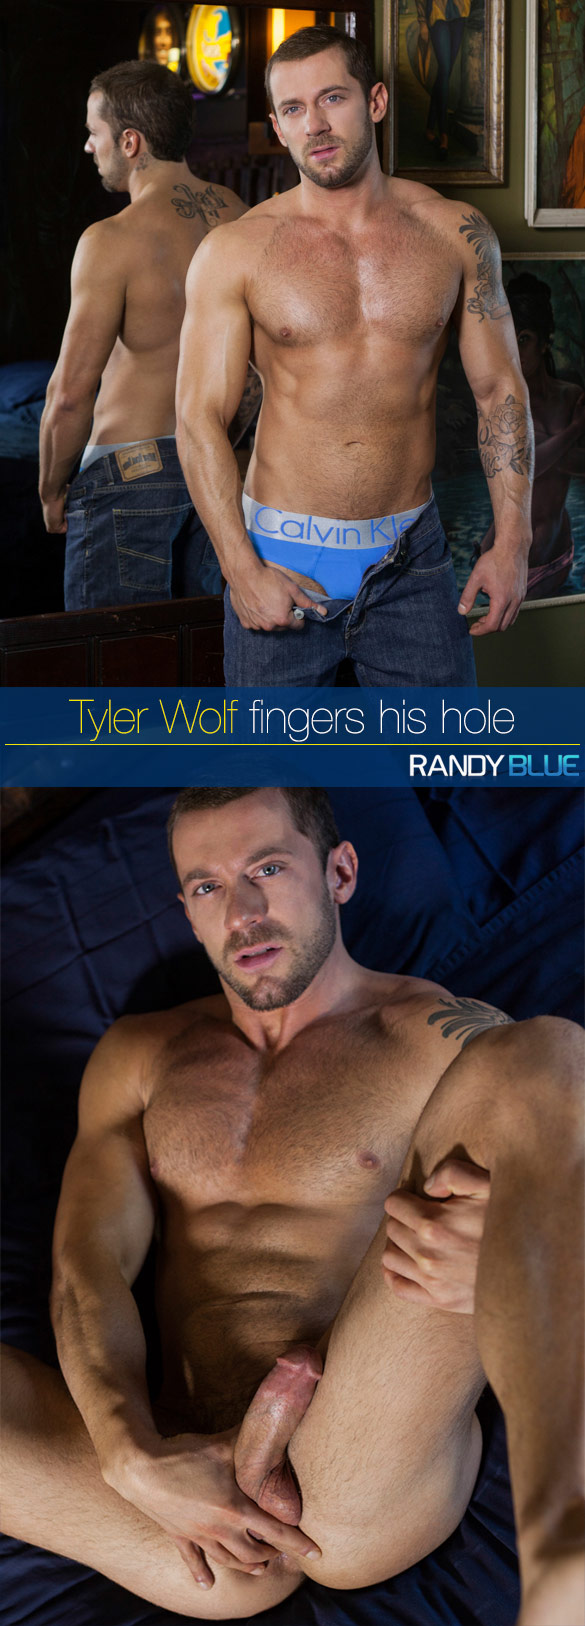 Randy Blue: Tyler Wolf busts a nut | Fagalicious - Gay Porn Blog